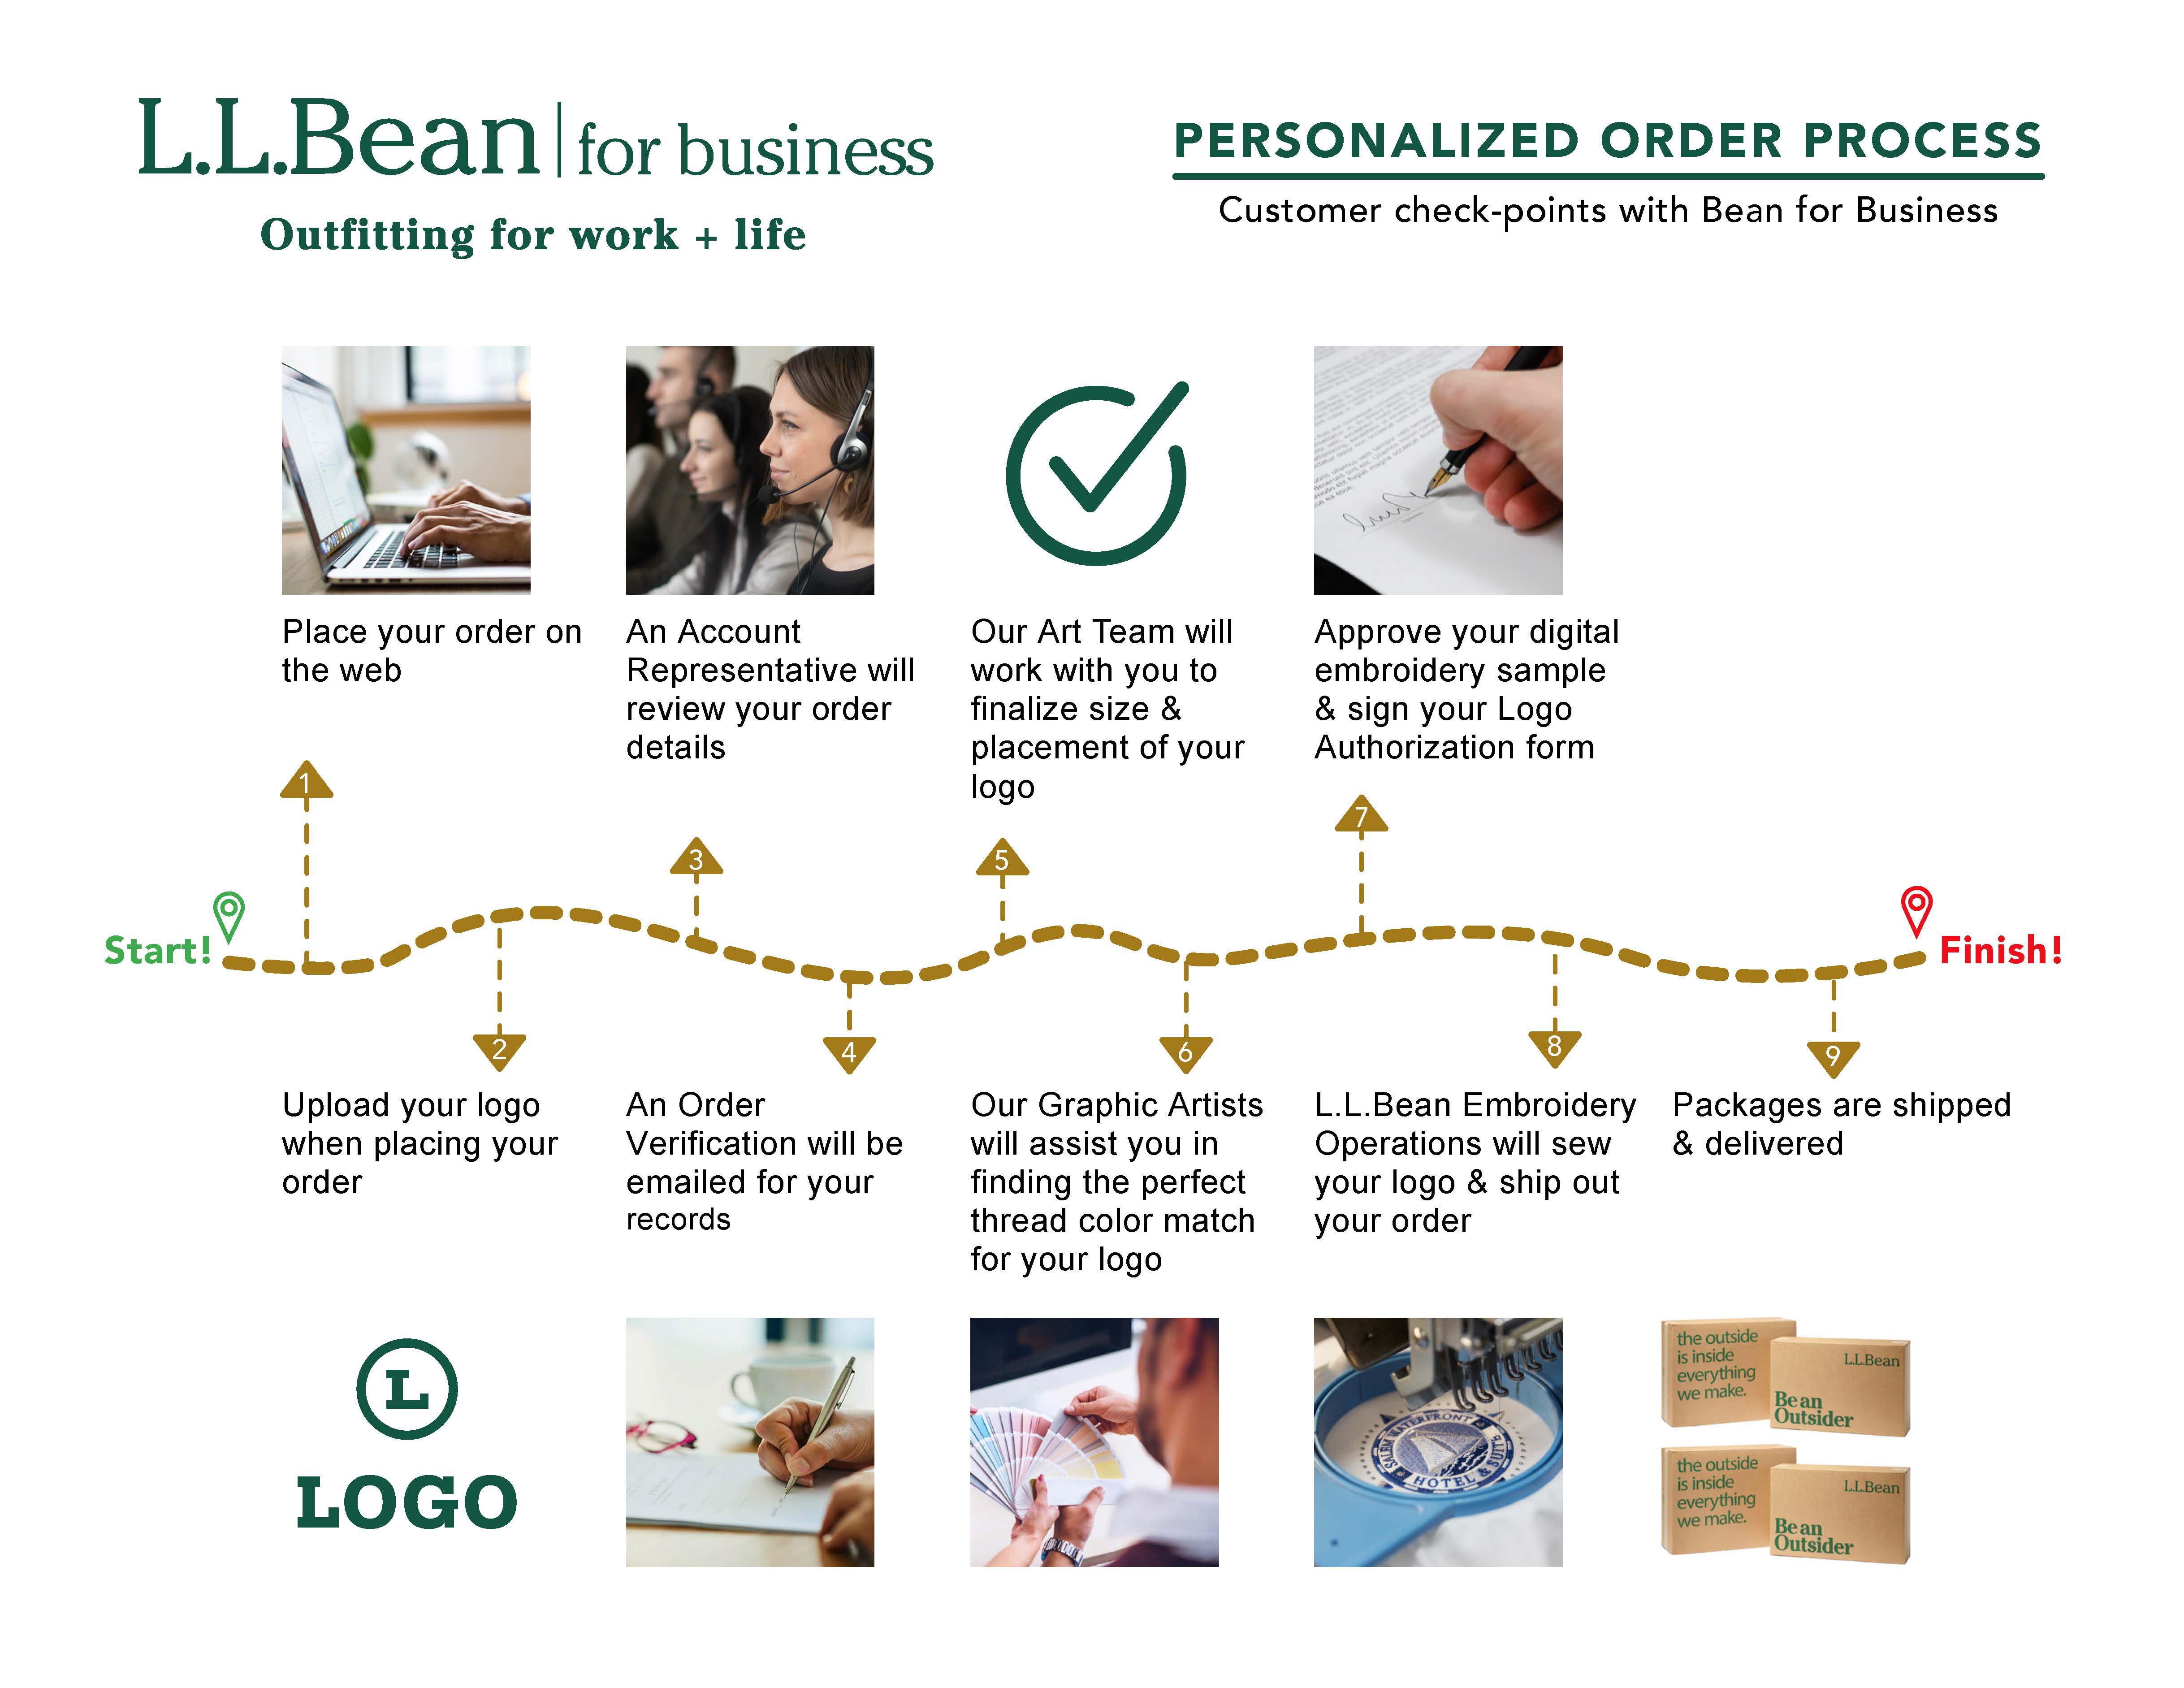 L.L.Bean Personalized Order Process